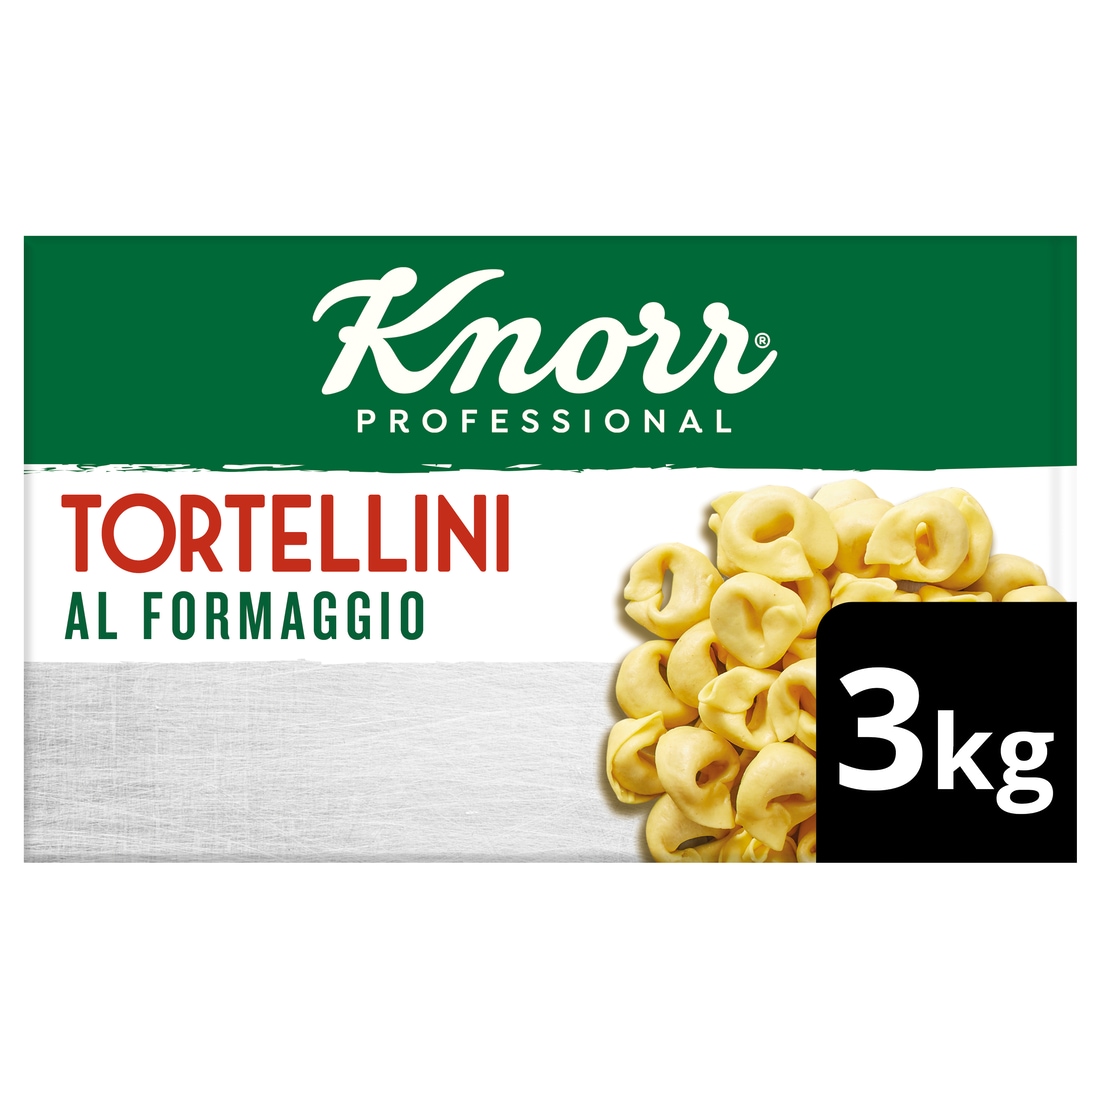 Knorr Professional Italiana Tortellini Al Formaggio 3x1kg - 